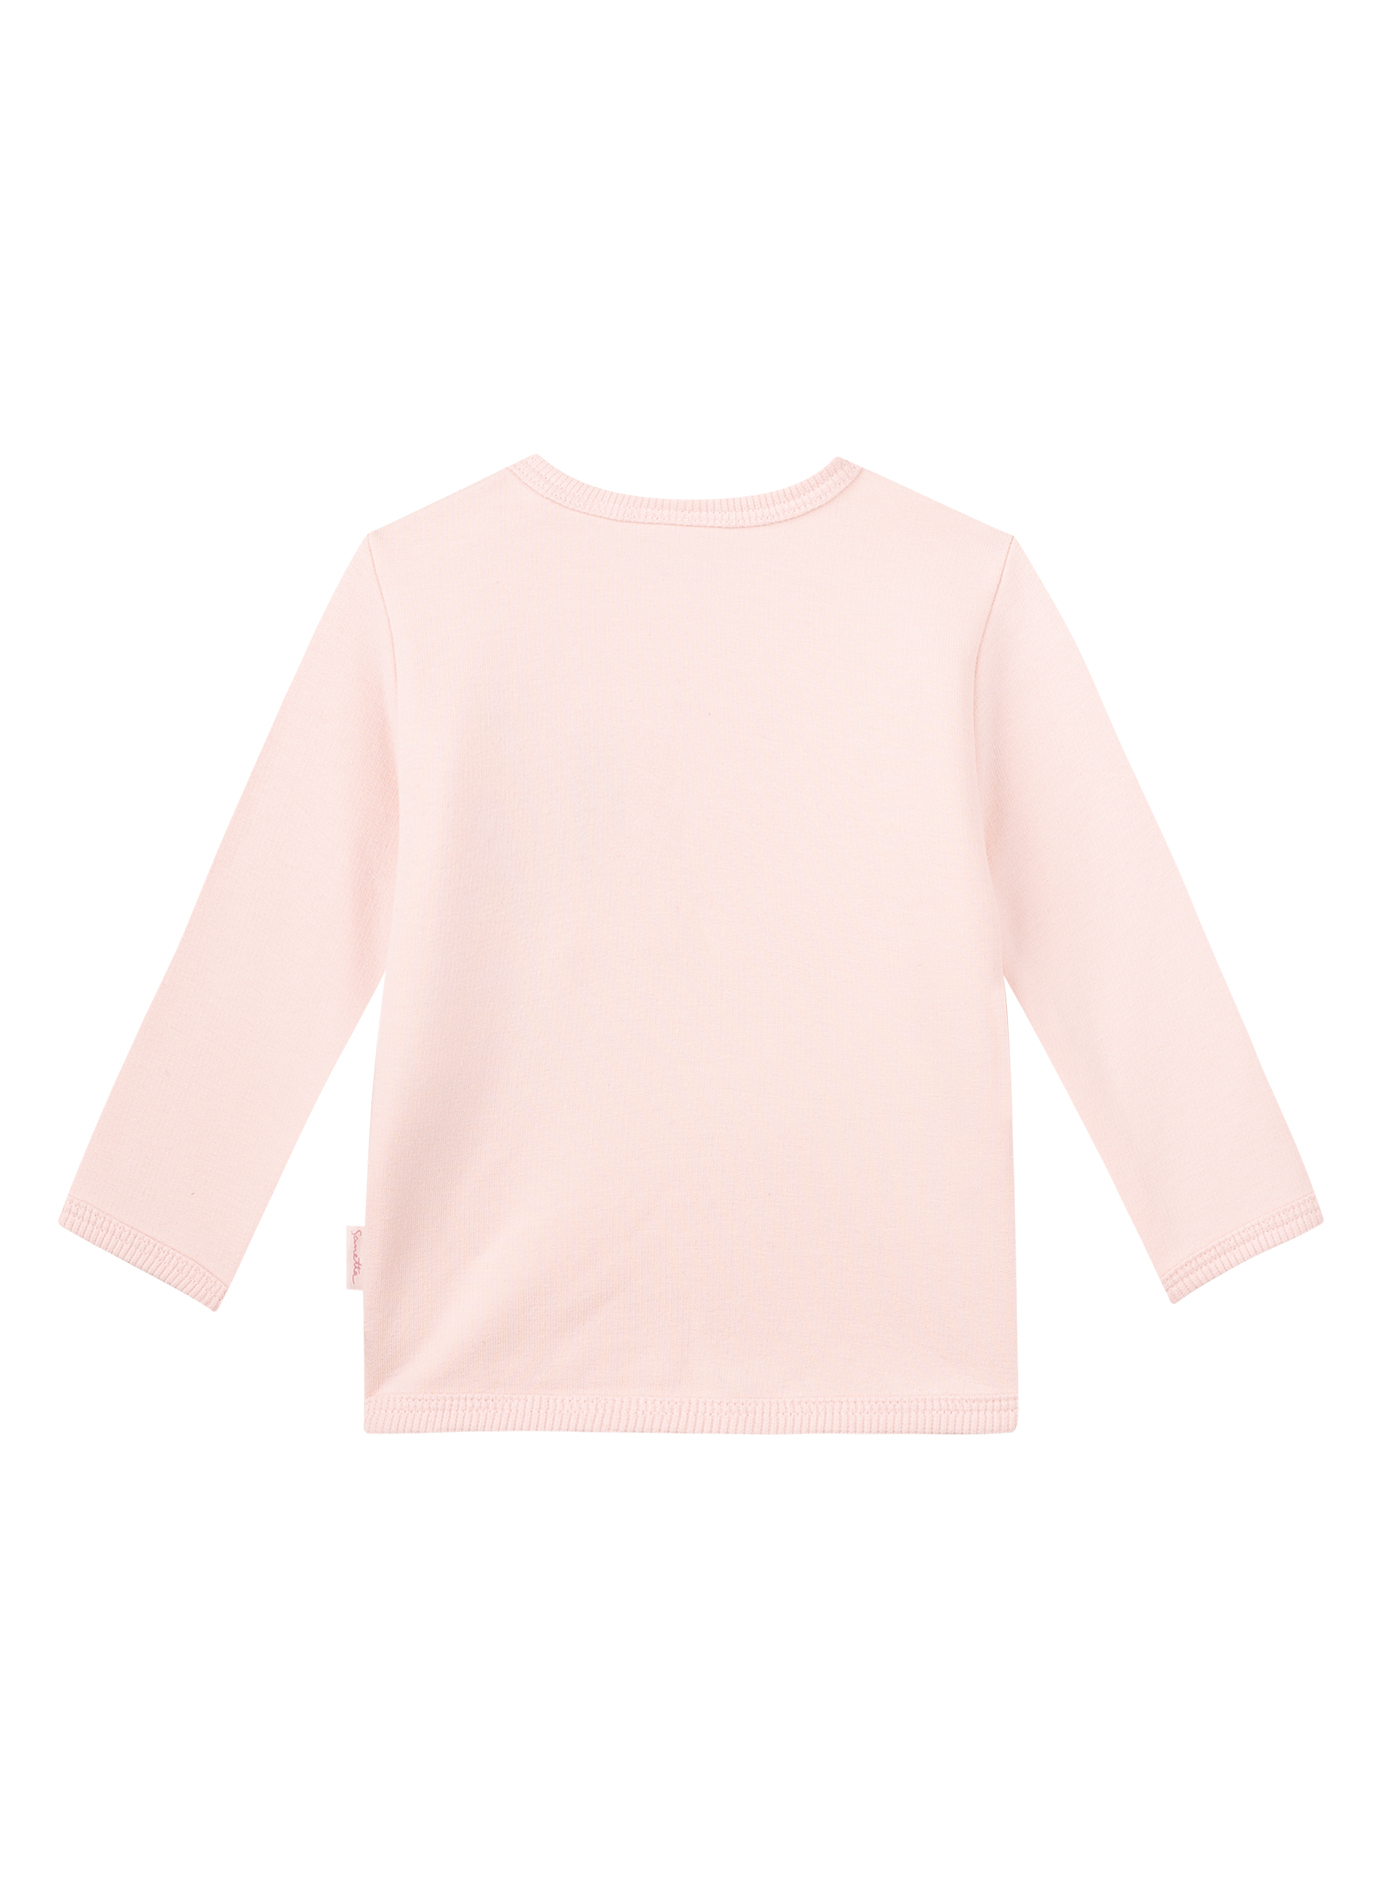 Mädchen-Shirt langarm Rosa 